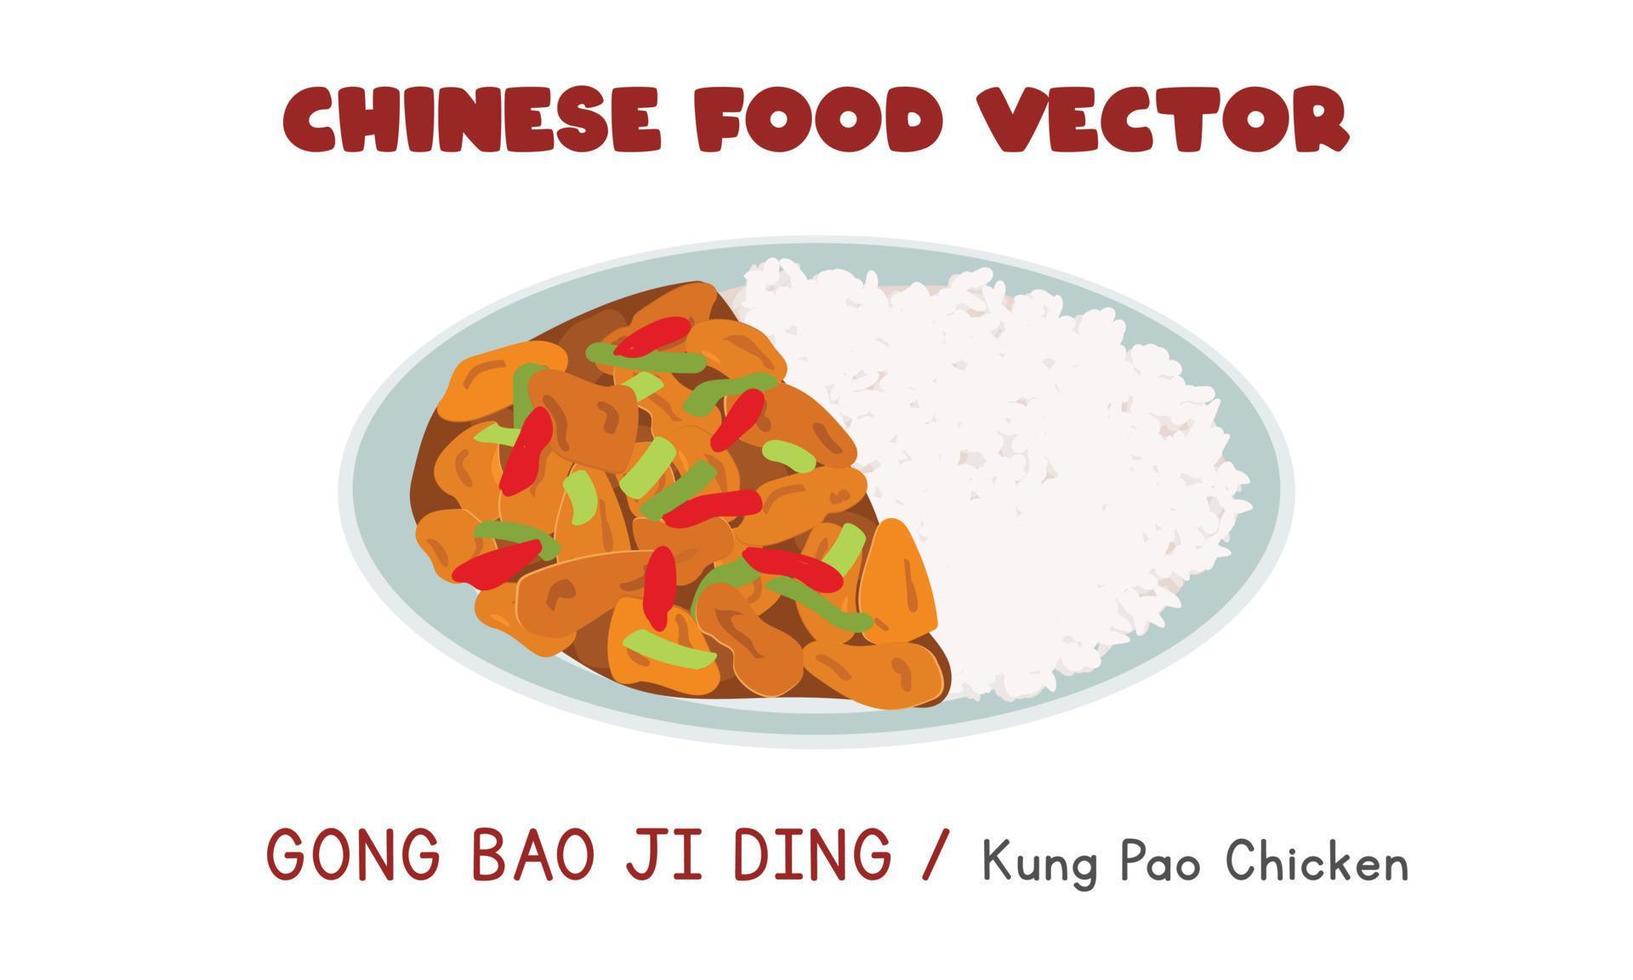 chino gong bao ji ding - ilustración de diseño de vector plano de pollo kung pao chino, estilo de dibujos animados de imágenes prediseñadas. comida asiática. cocina china. comida china